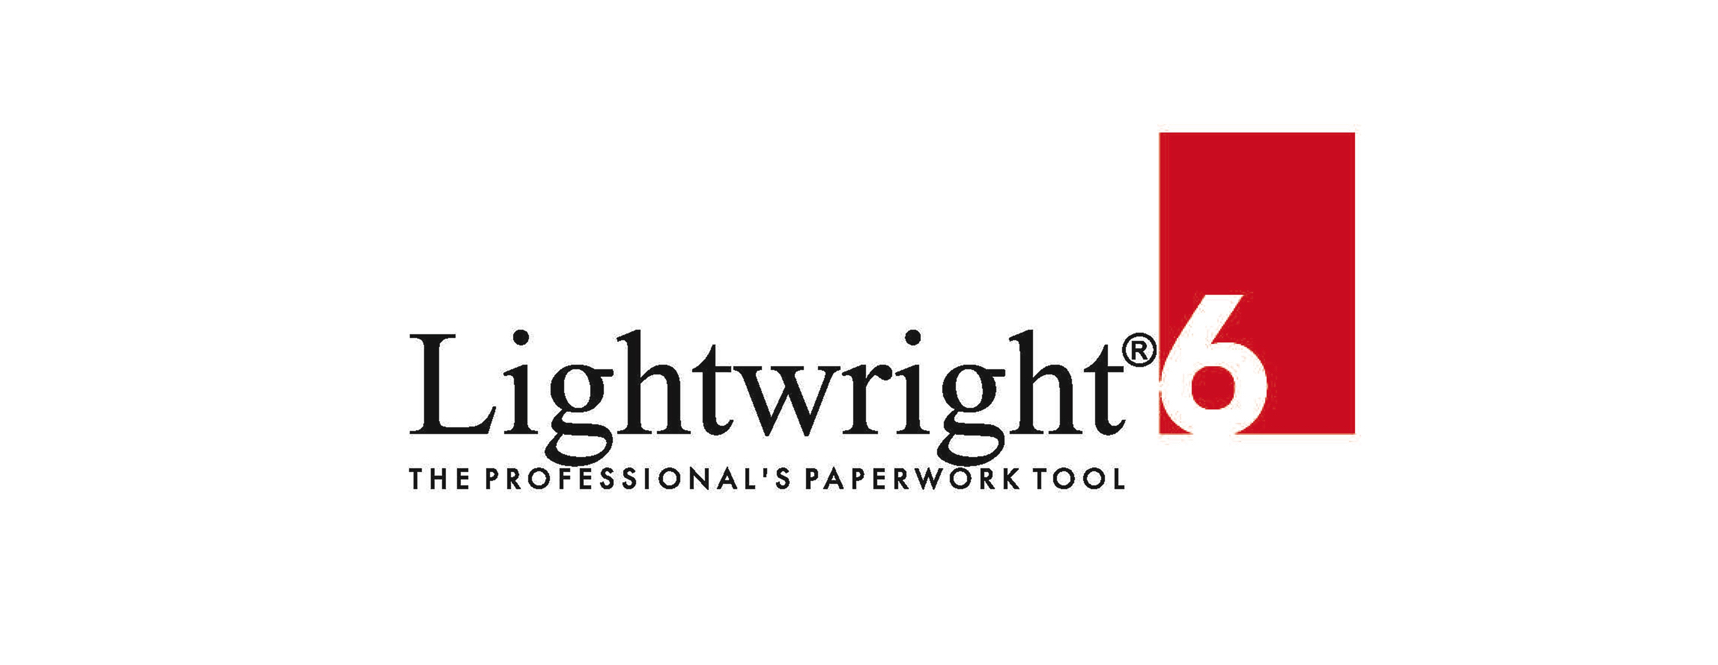 lightwright 6 student